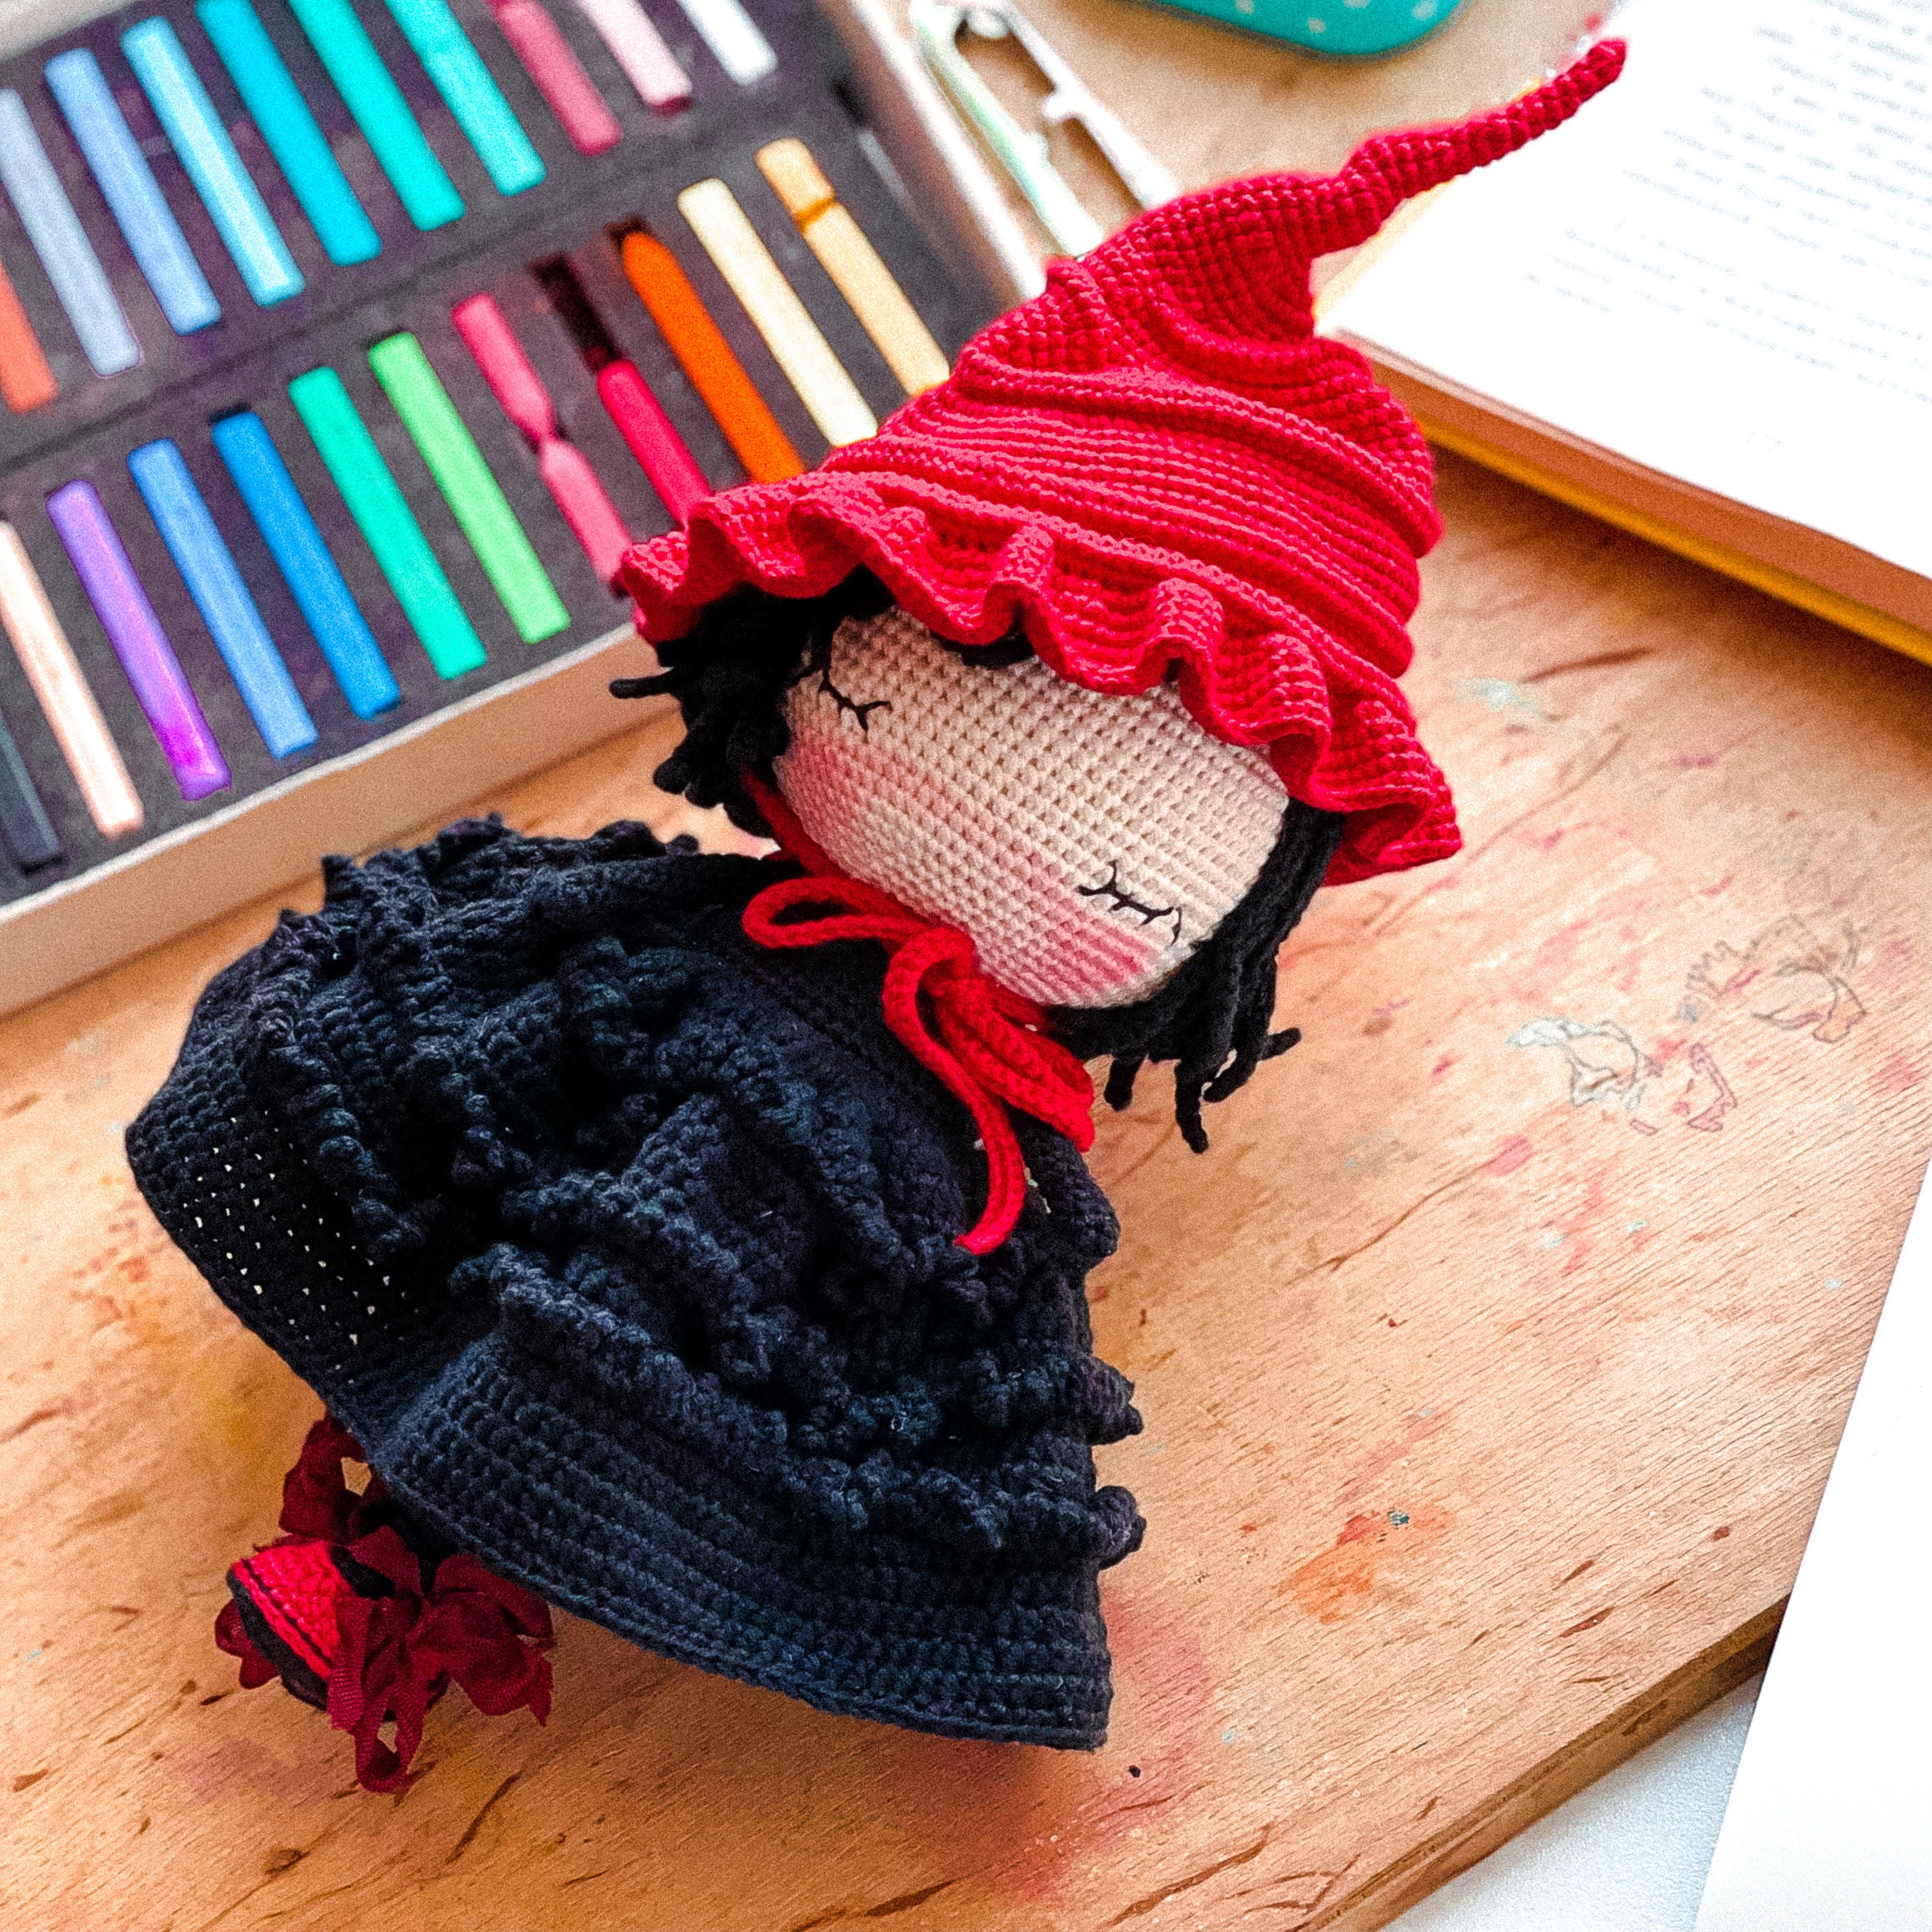 PDF PATTERN Amigurumi Doll Cute Sheep, Crochet Stuffed Toy, Best Gift Idea  English, Español, Français, Portuguesa Brasileira, Deutsch 